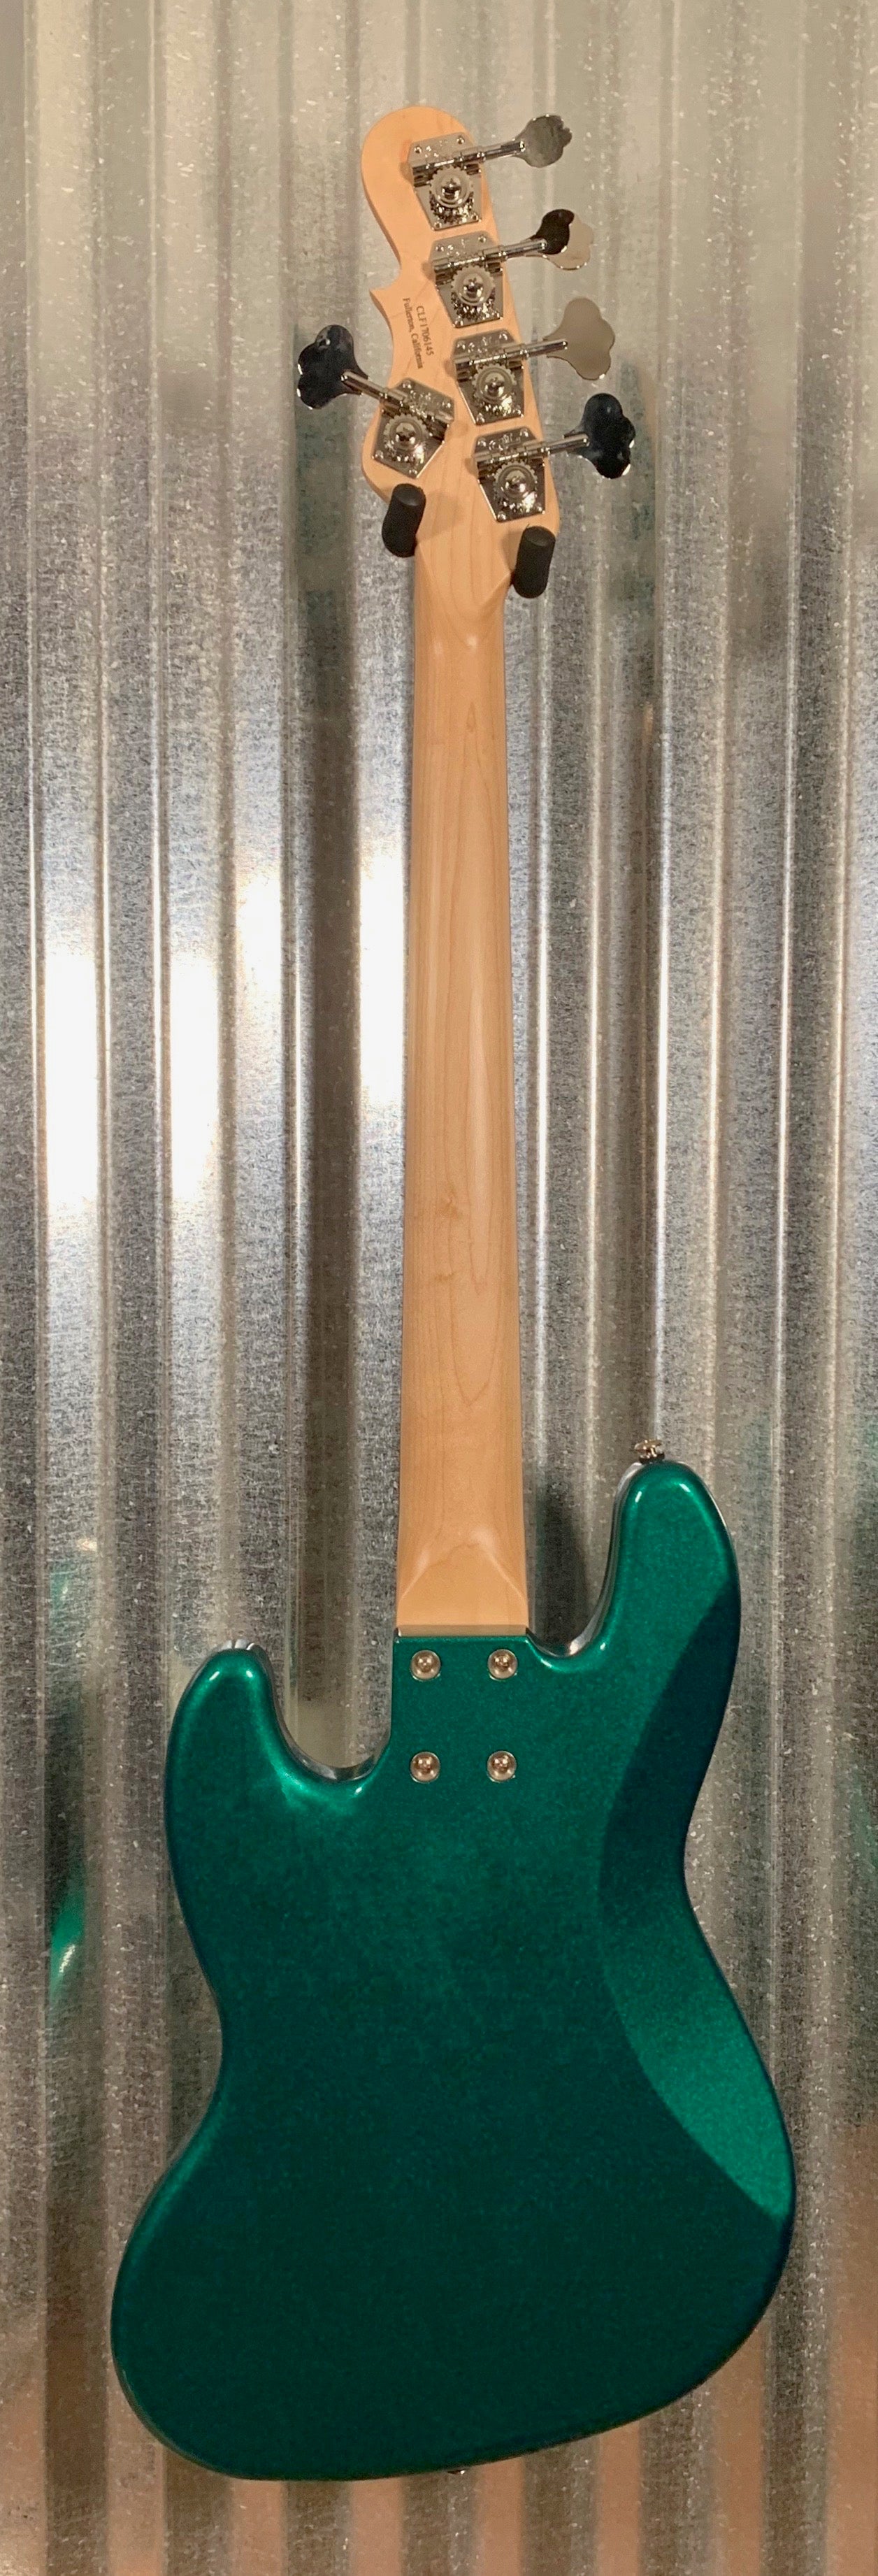 G&L USA Fullerton Custom JB5 Emerald Green 5 String Jazz Bass & Case JB-5 2017 #6145